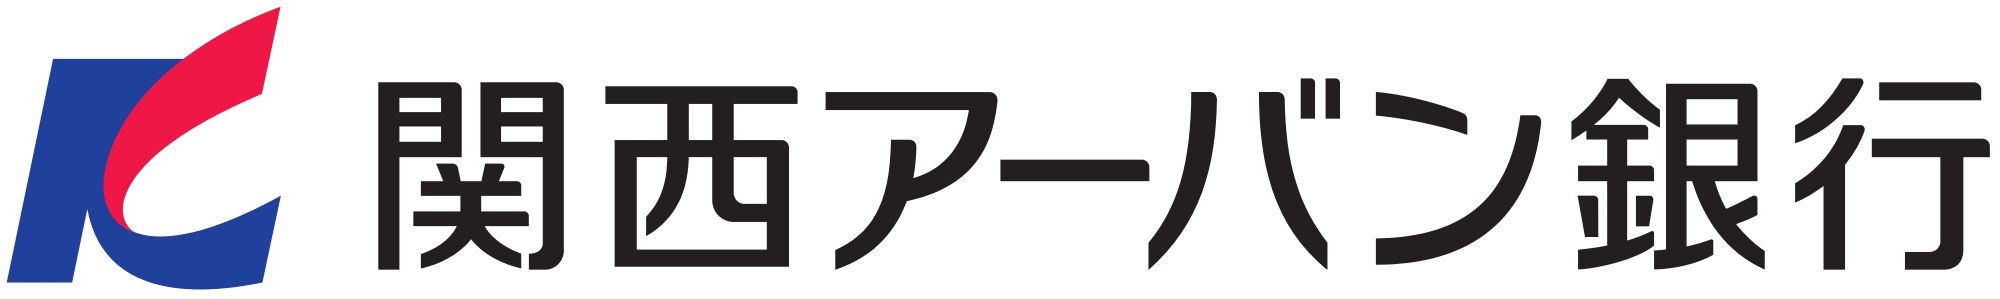 Kansai Urban Bank Brand Logo